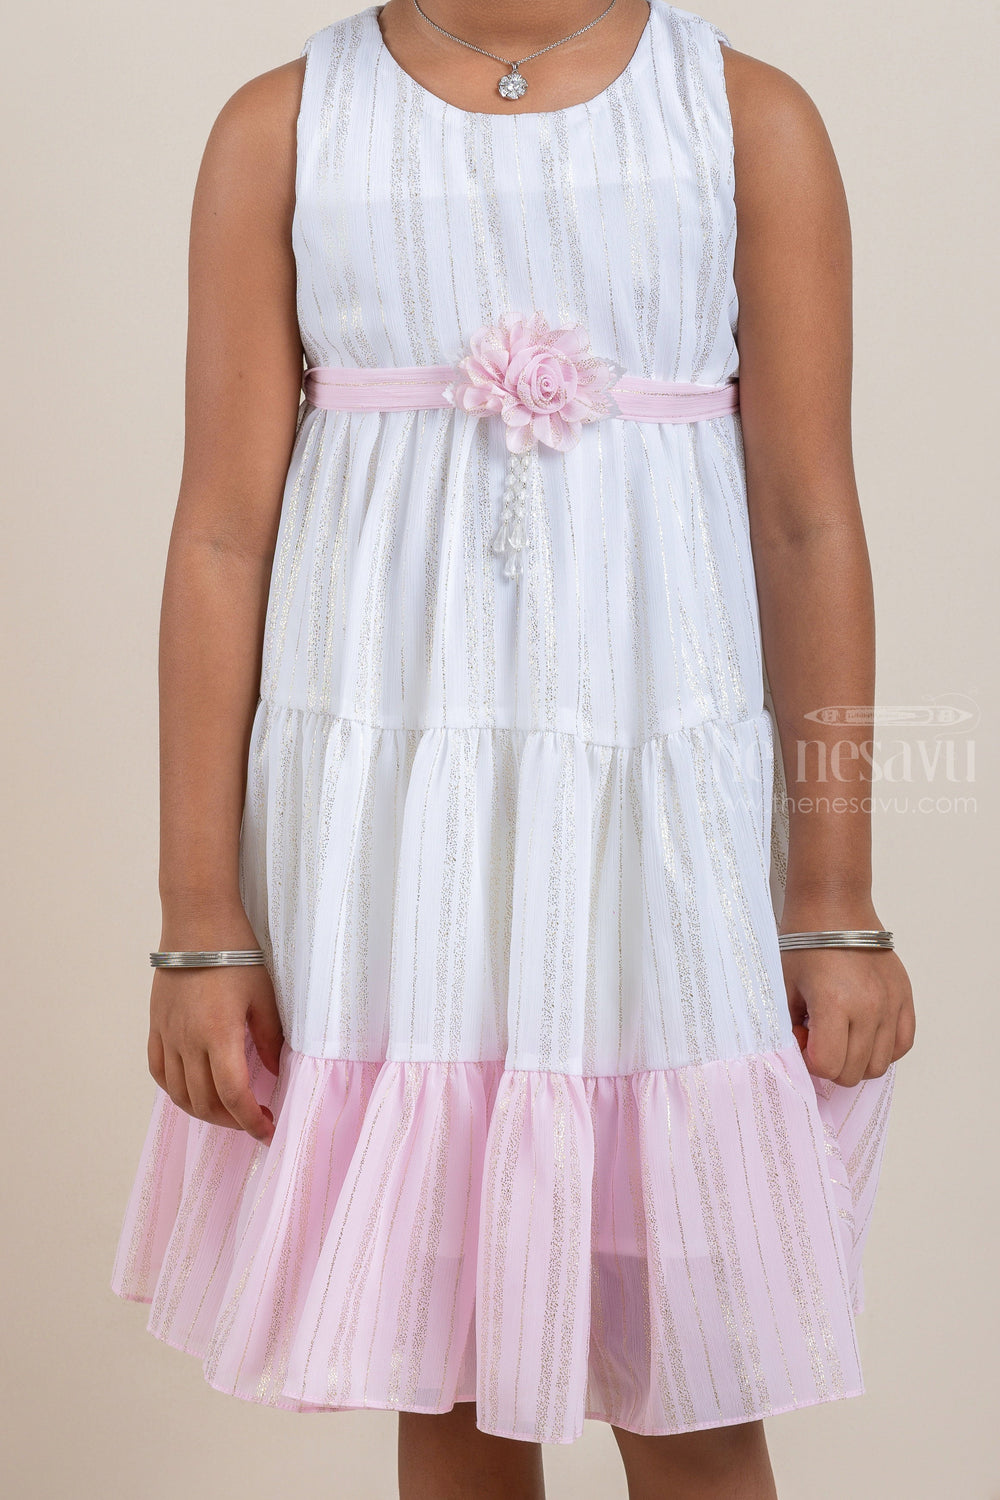 The Nesavu Frocks & Dresses Layered Pink and Cream White A-Line Frock with Floral Embellished Belt psr silks Nesavu